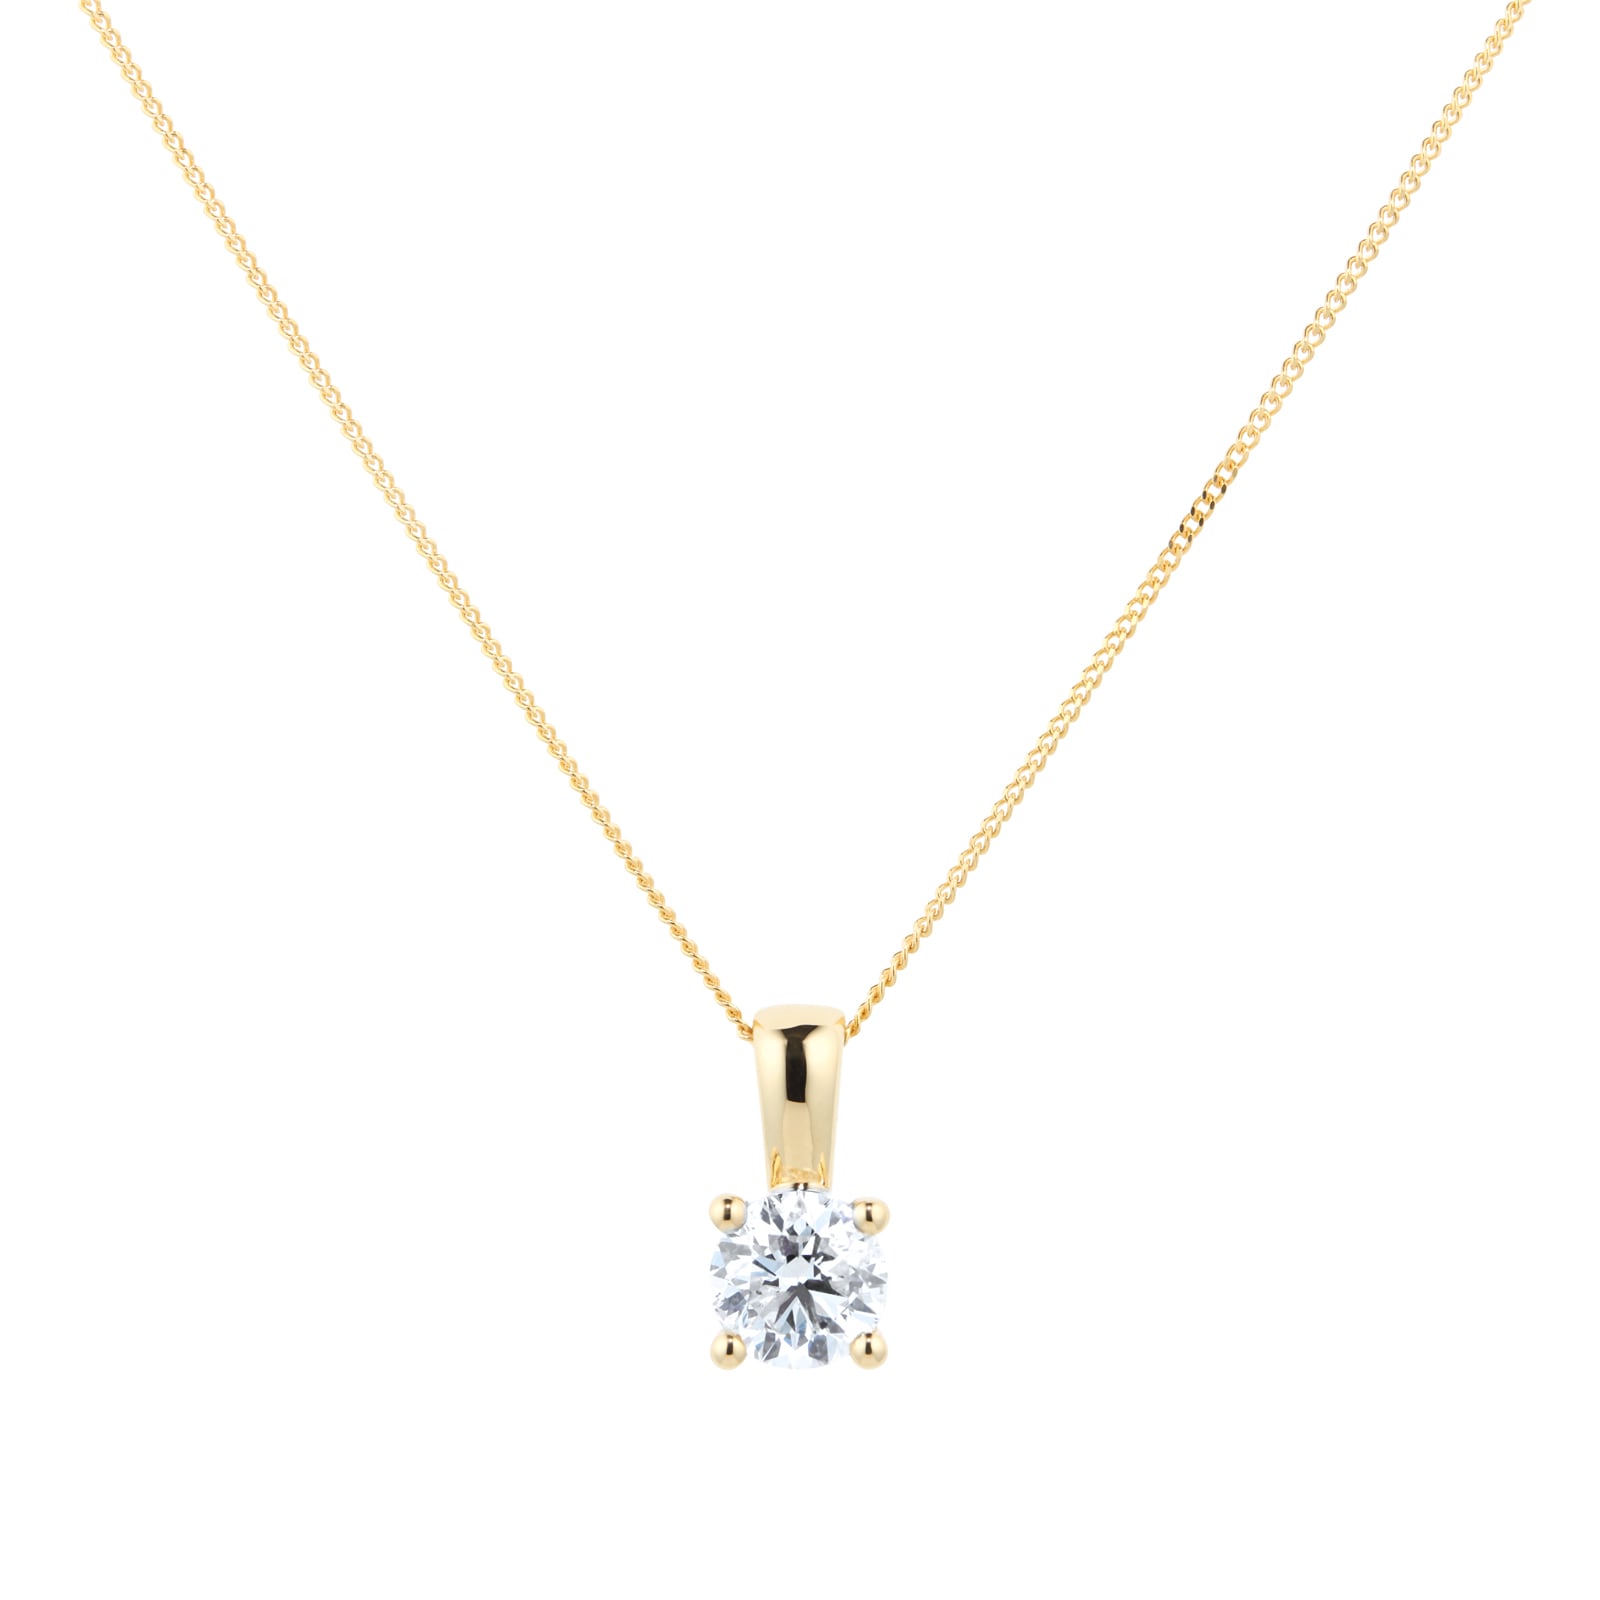 18ct White Gold Diamond and Blue Sapphire Pendant